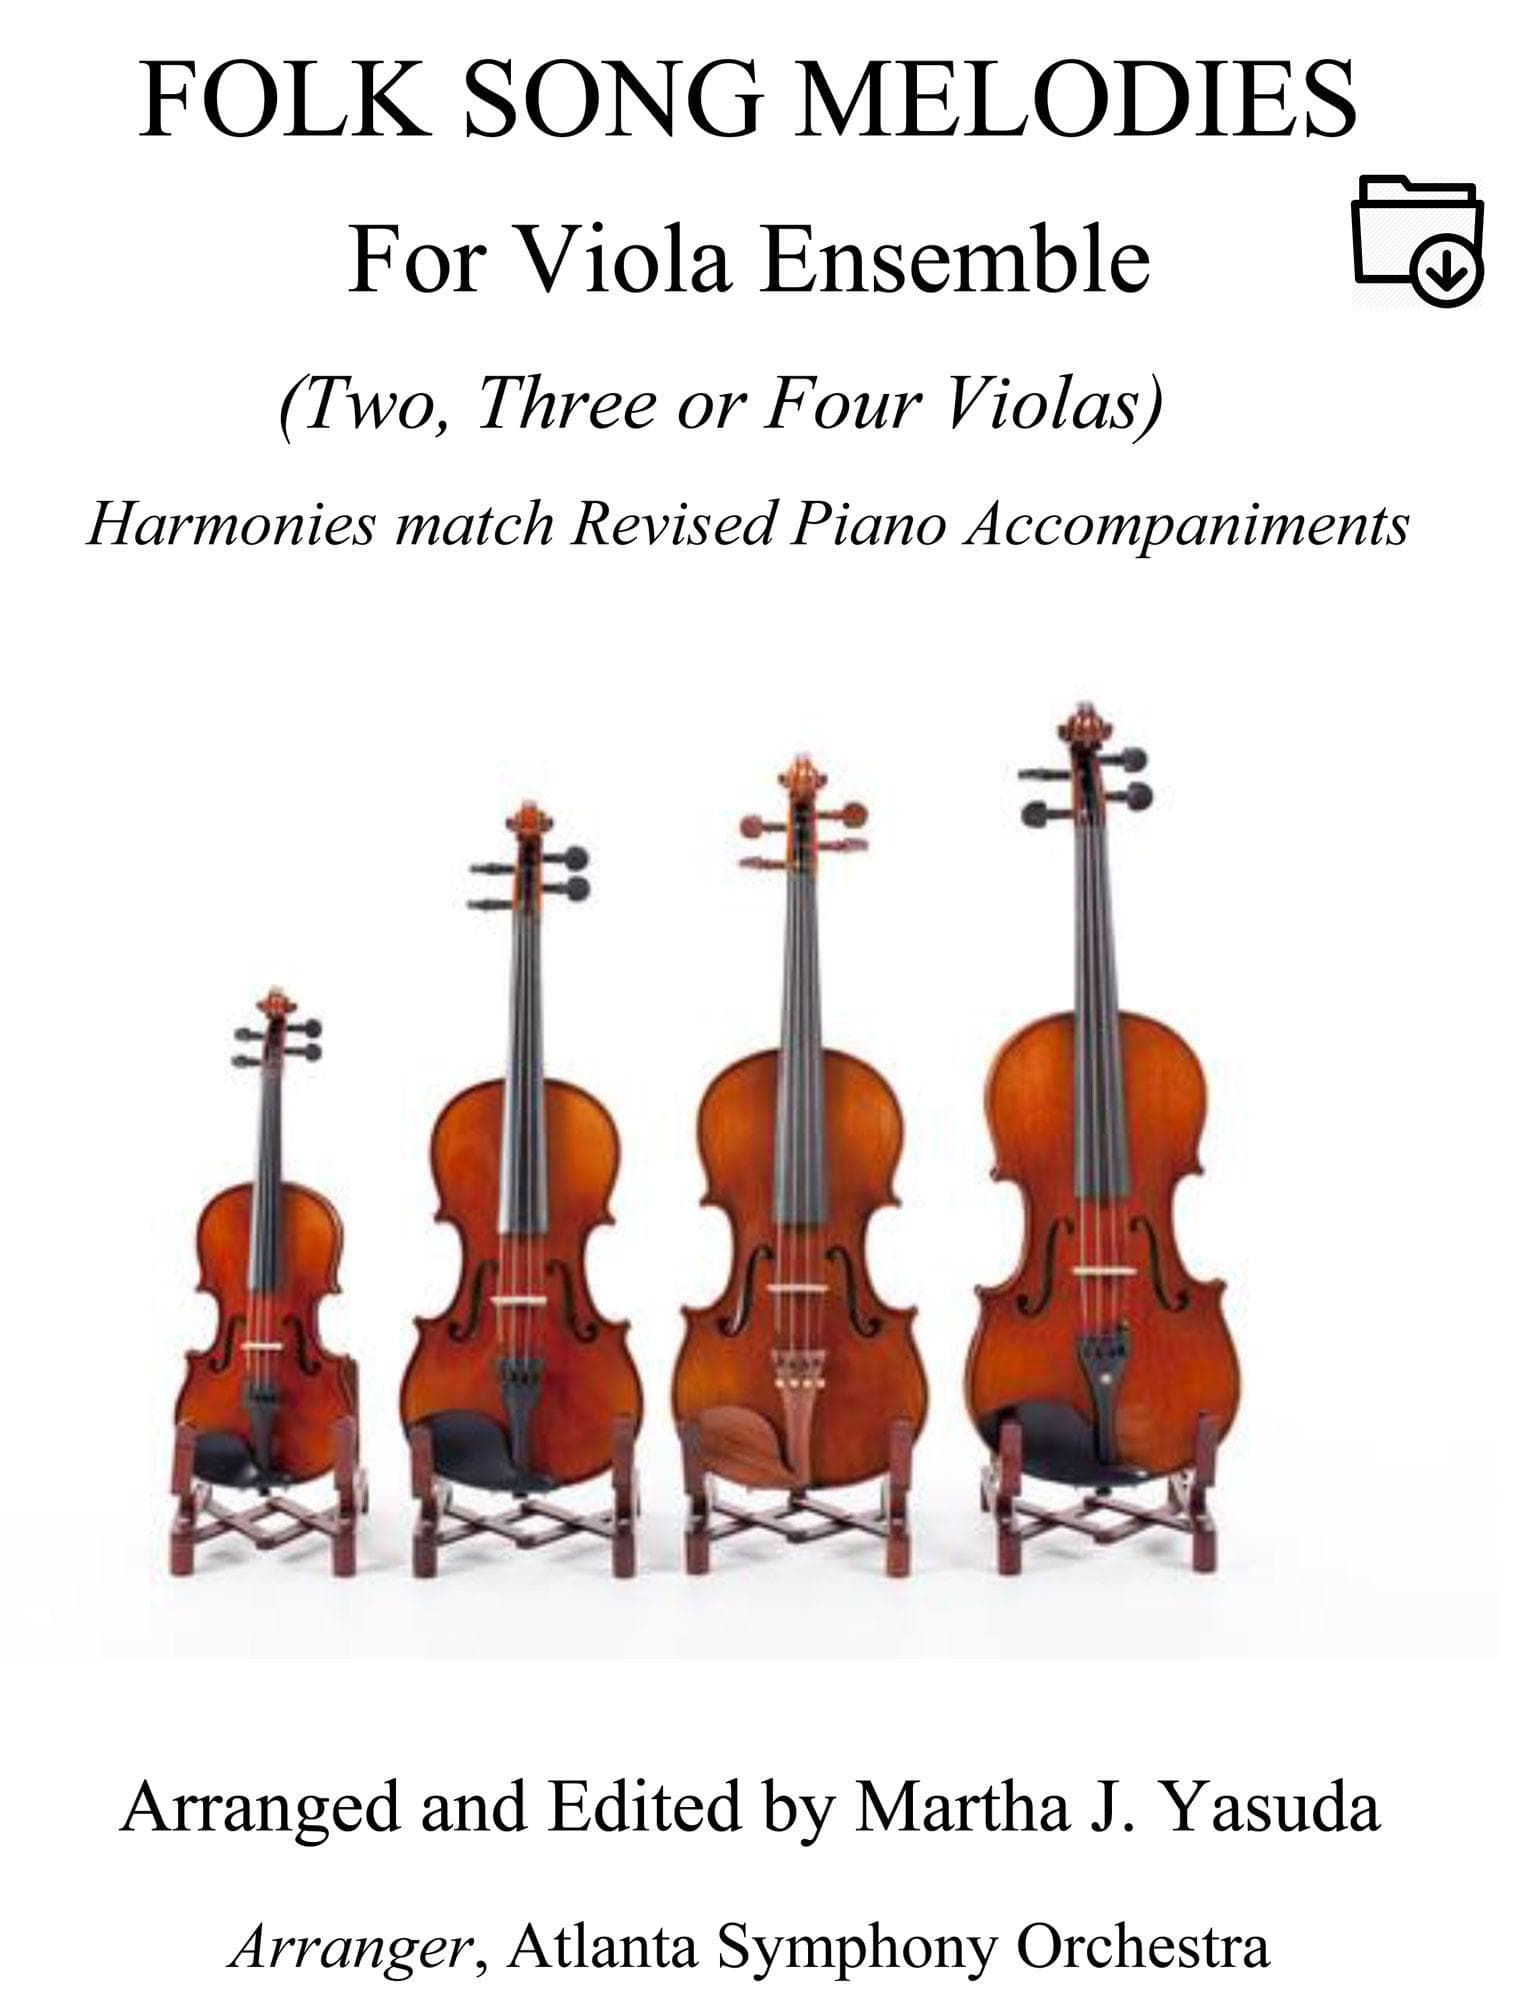 Yasuda, Martha - Folk Song Melodies For Viola Ensemble - Digital Download